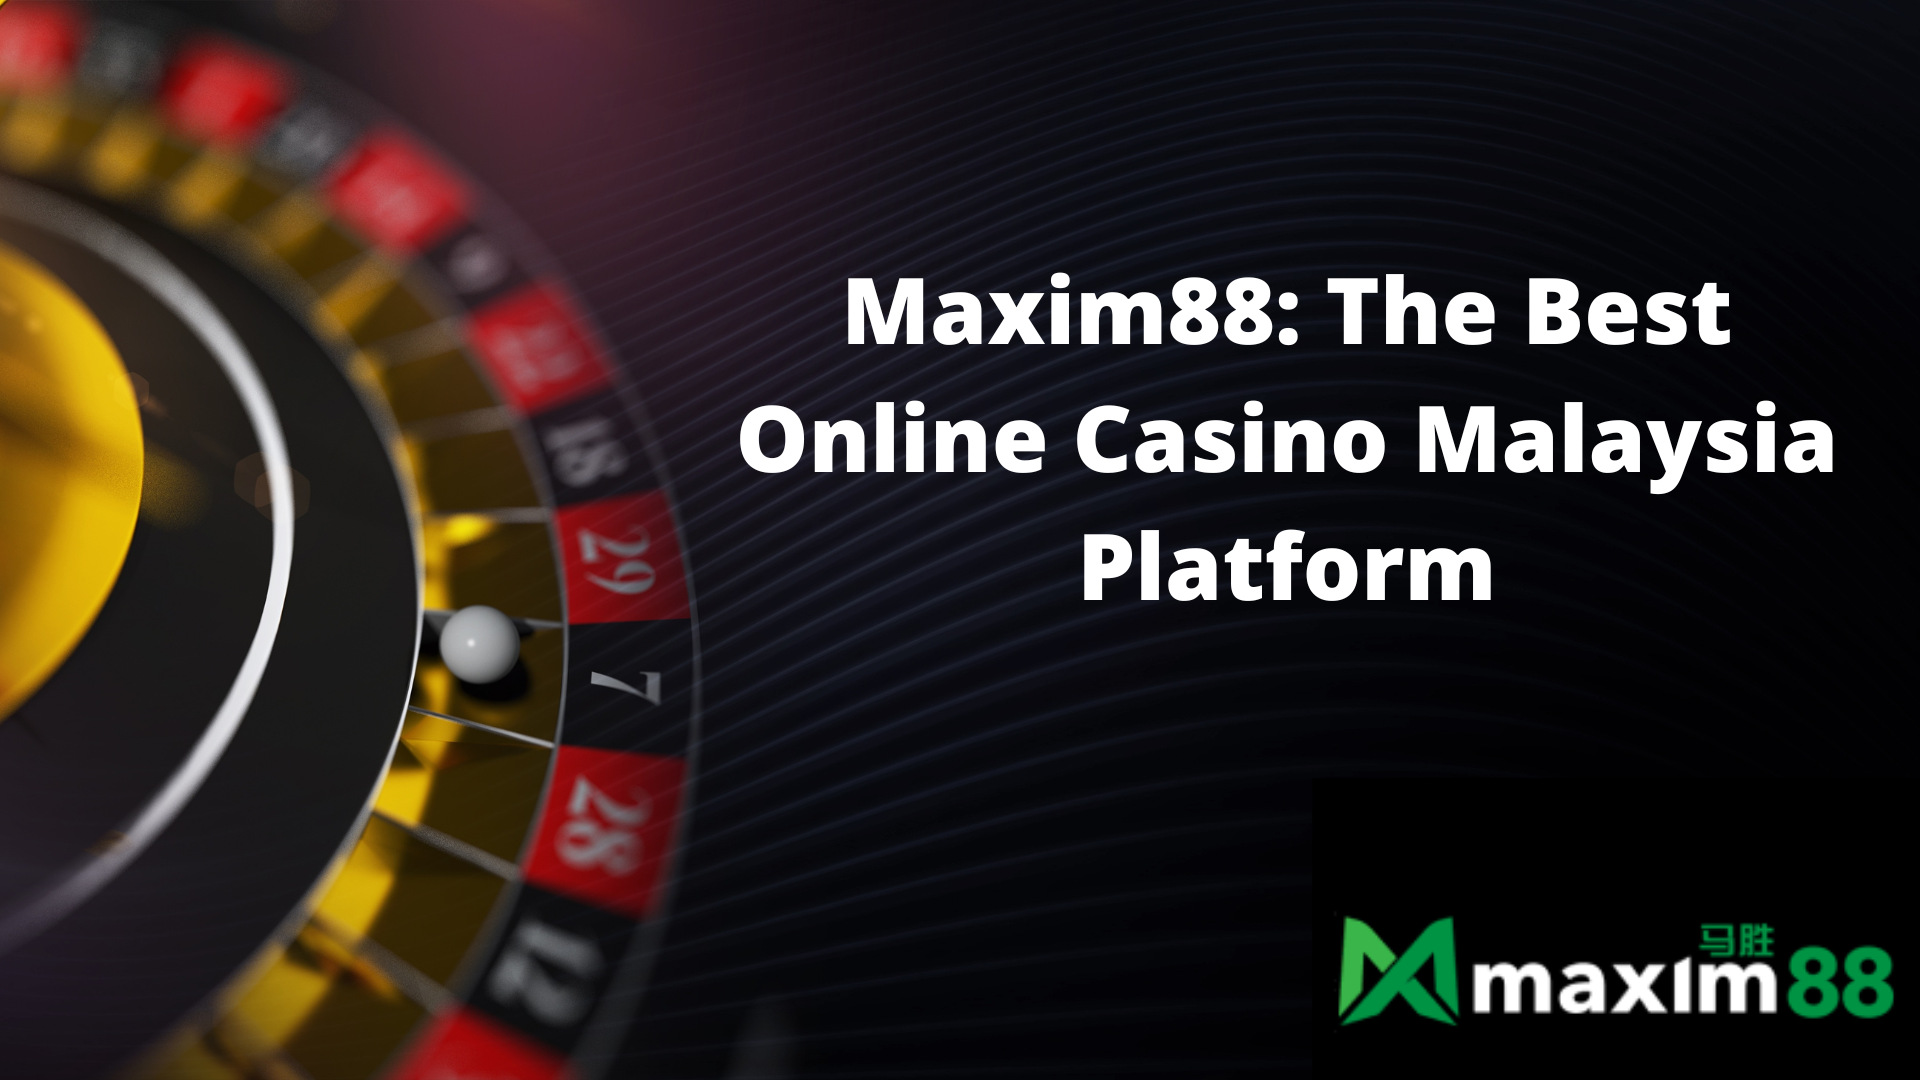 Maxim88: The Best Online Casino Malaysia Platform